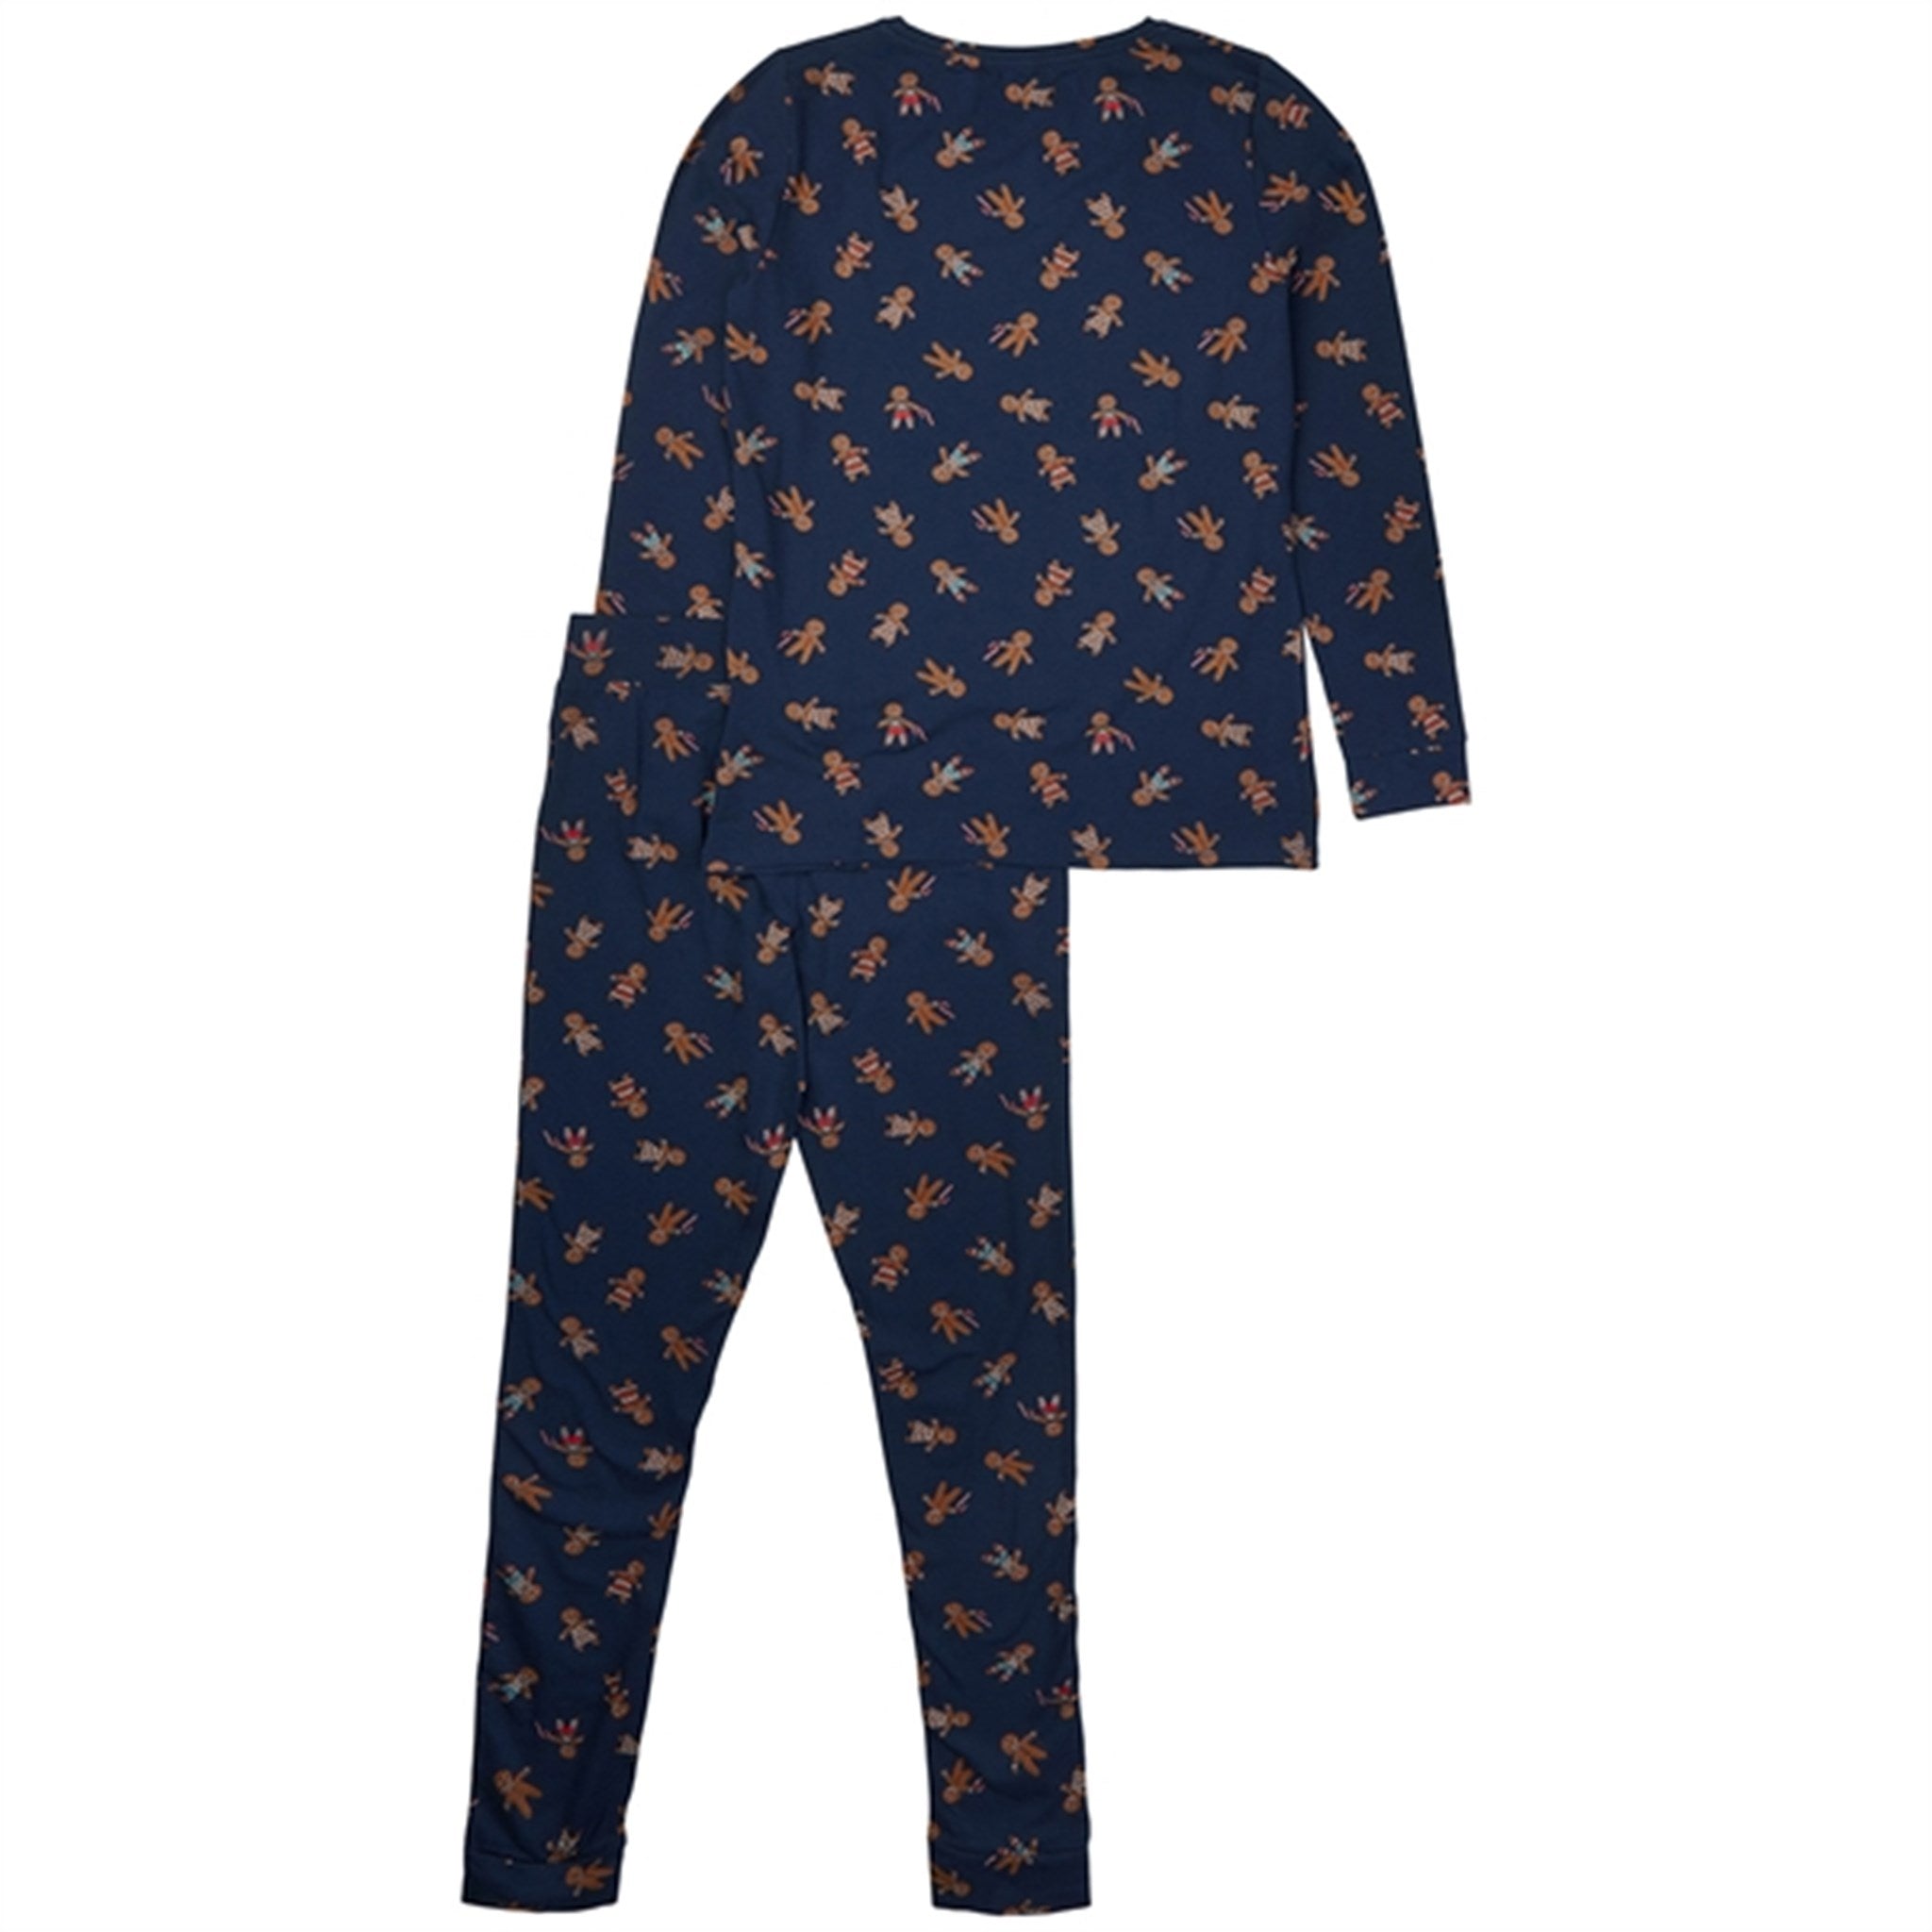 The New Navy Blazer Ginger Aop Holiday Pyjamas Adult 2